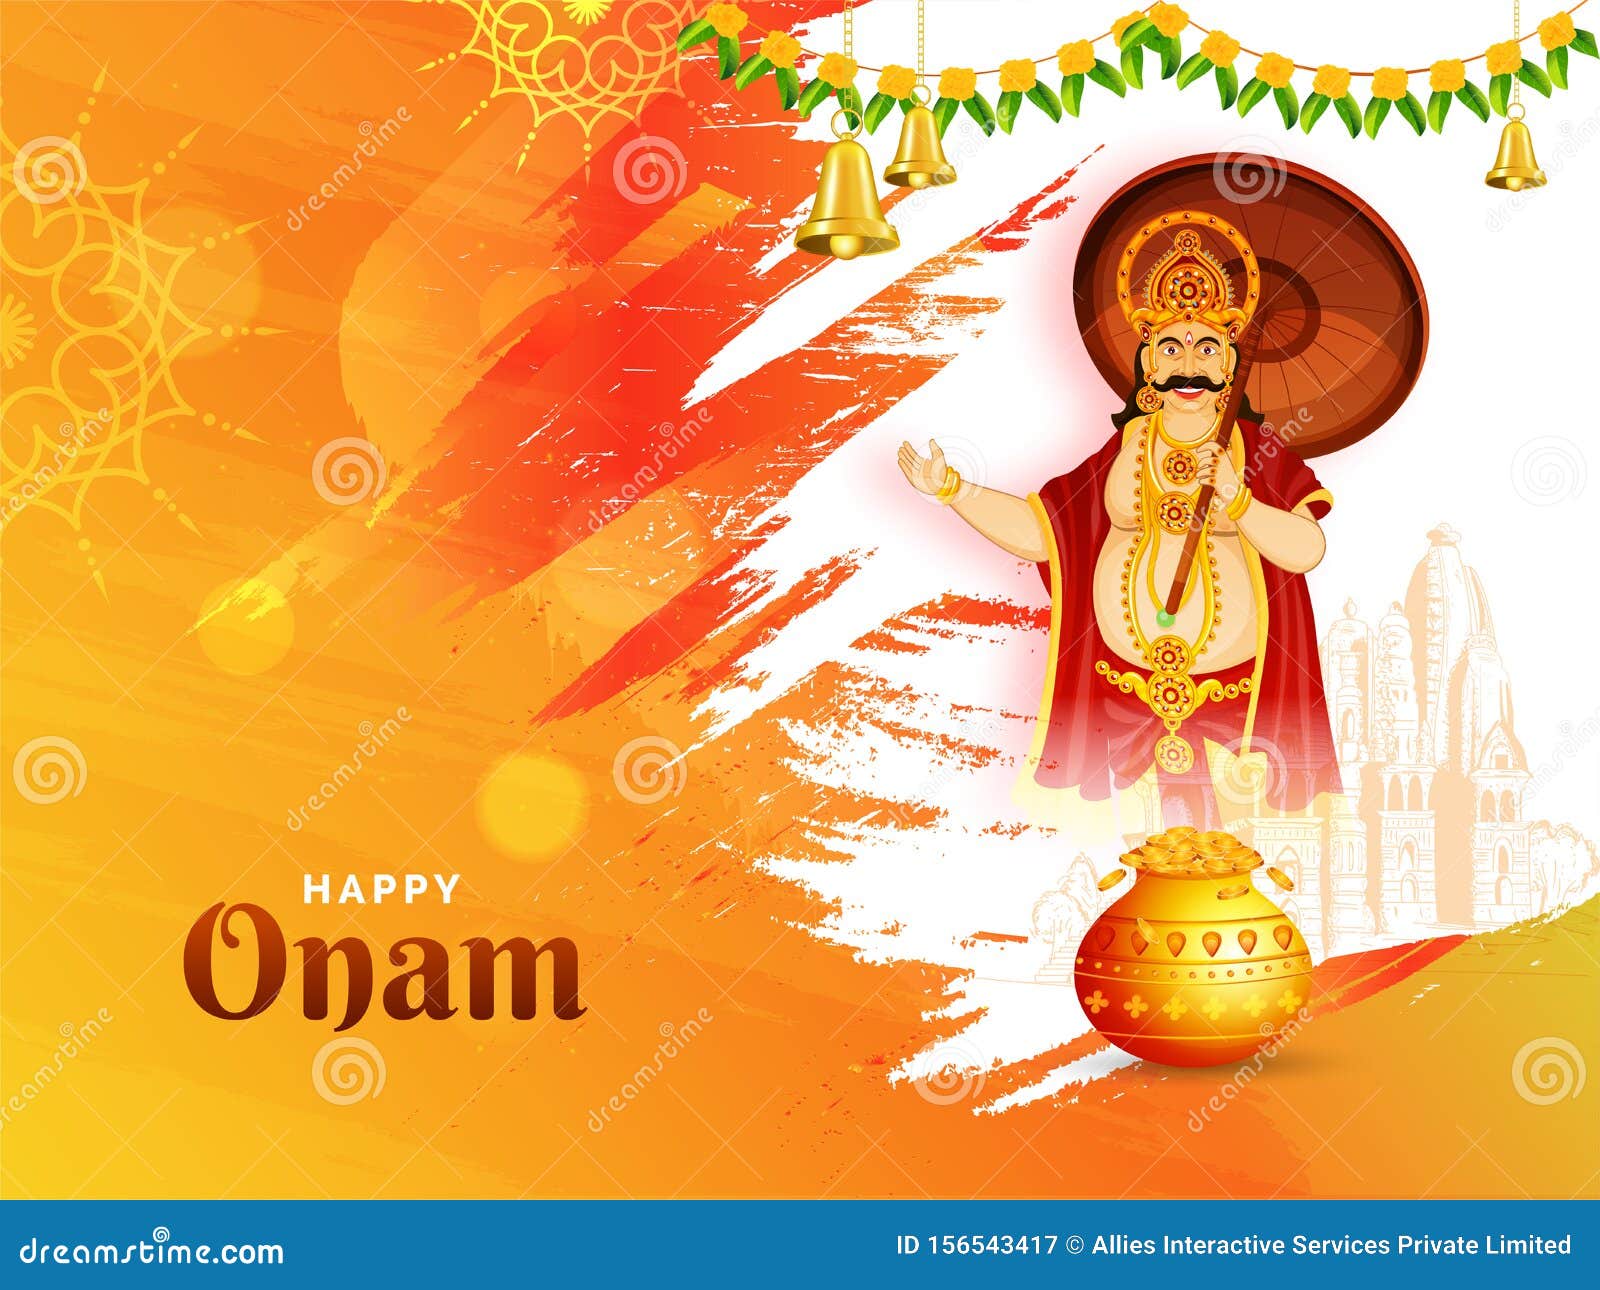 Creative Happy Onam Festival Card or Poster Design, Illustration of King  Mahabali Holding Umbrella with Coins Pot. Stock Illustration - Illustration  of hindu, celebration: 156543417